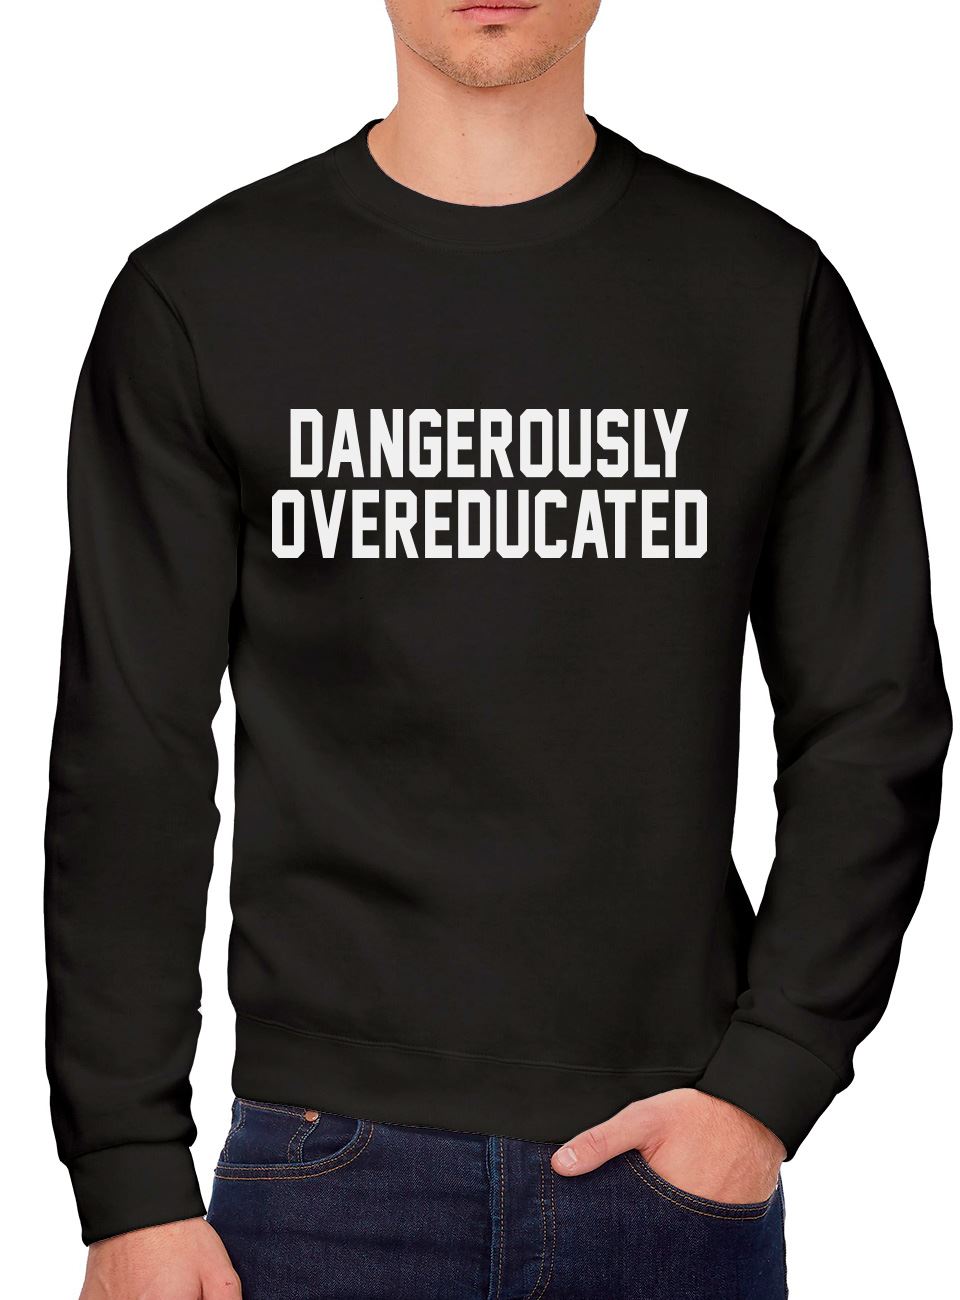 Dangerously Overeducated - Youth & Mens Sweatshirt